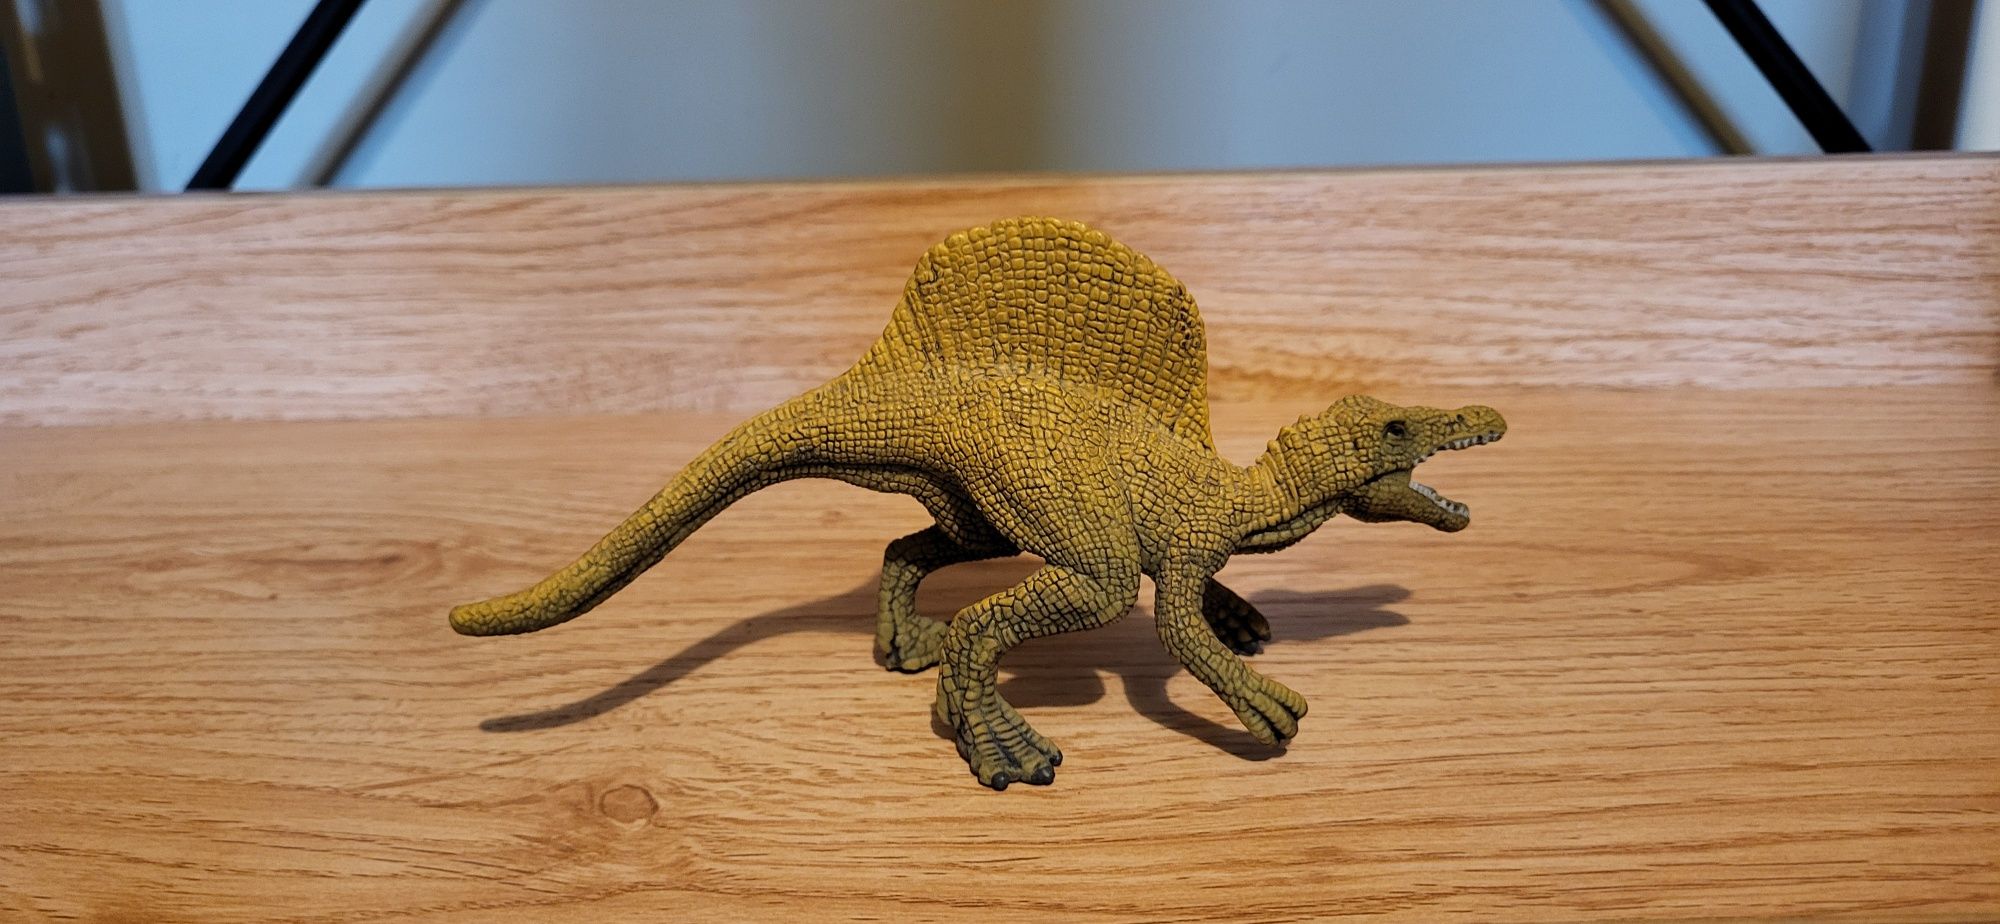 Schleich dinozaur spinozaur figurka edycja limitowana 2019 r.